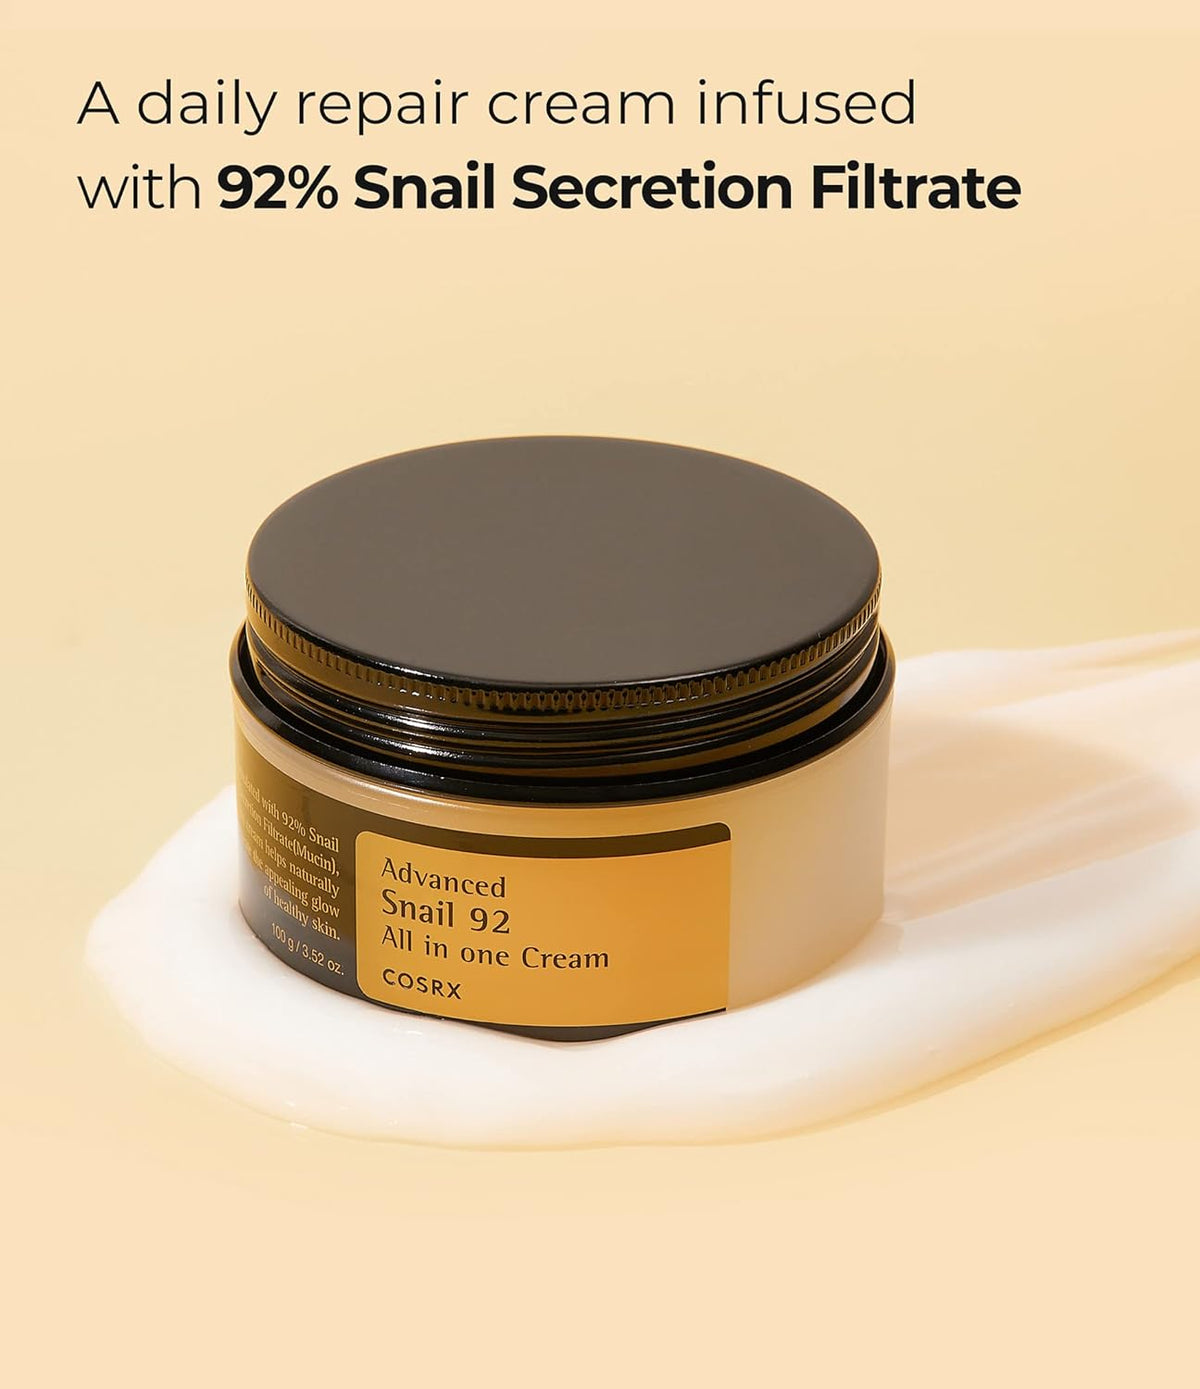 COSRX Advanced Snail 92 All In One Cream/anti-aging rejuvenation & maintenance